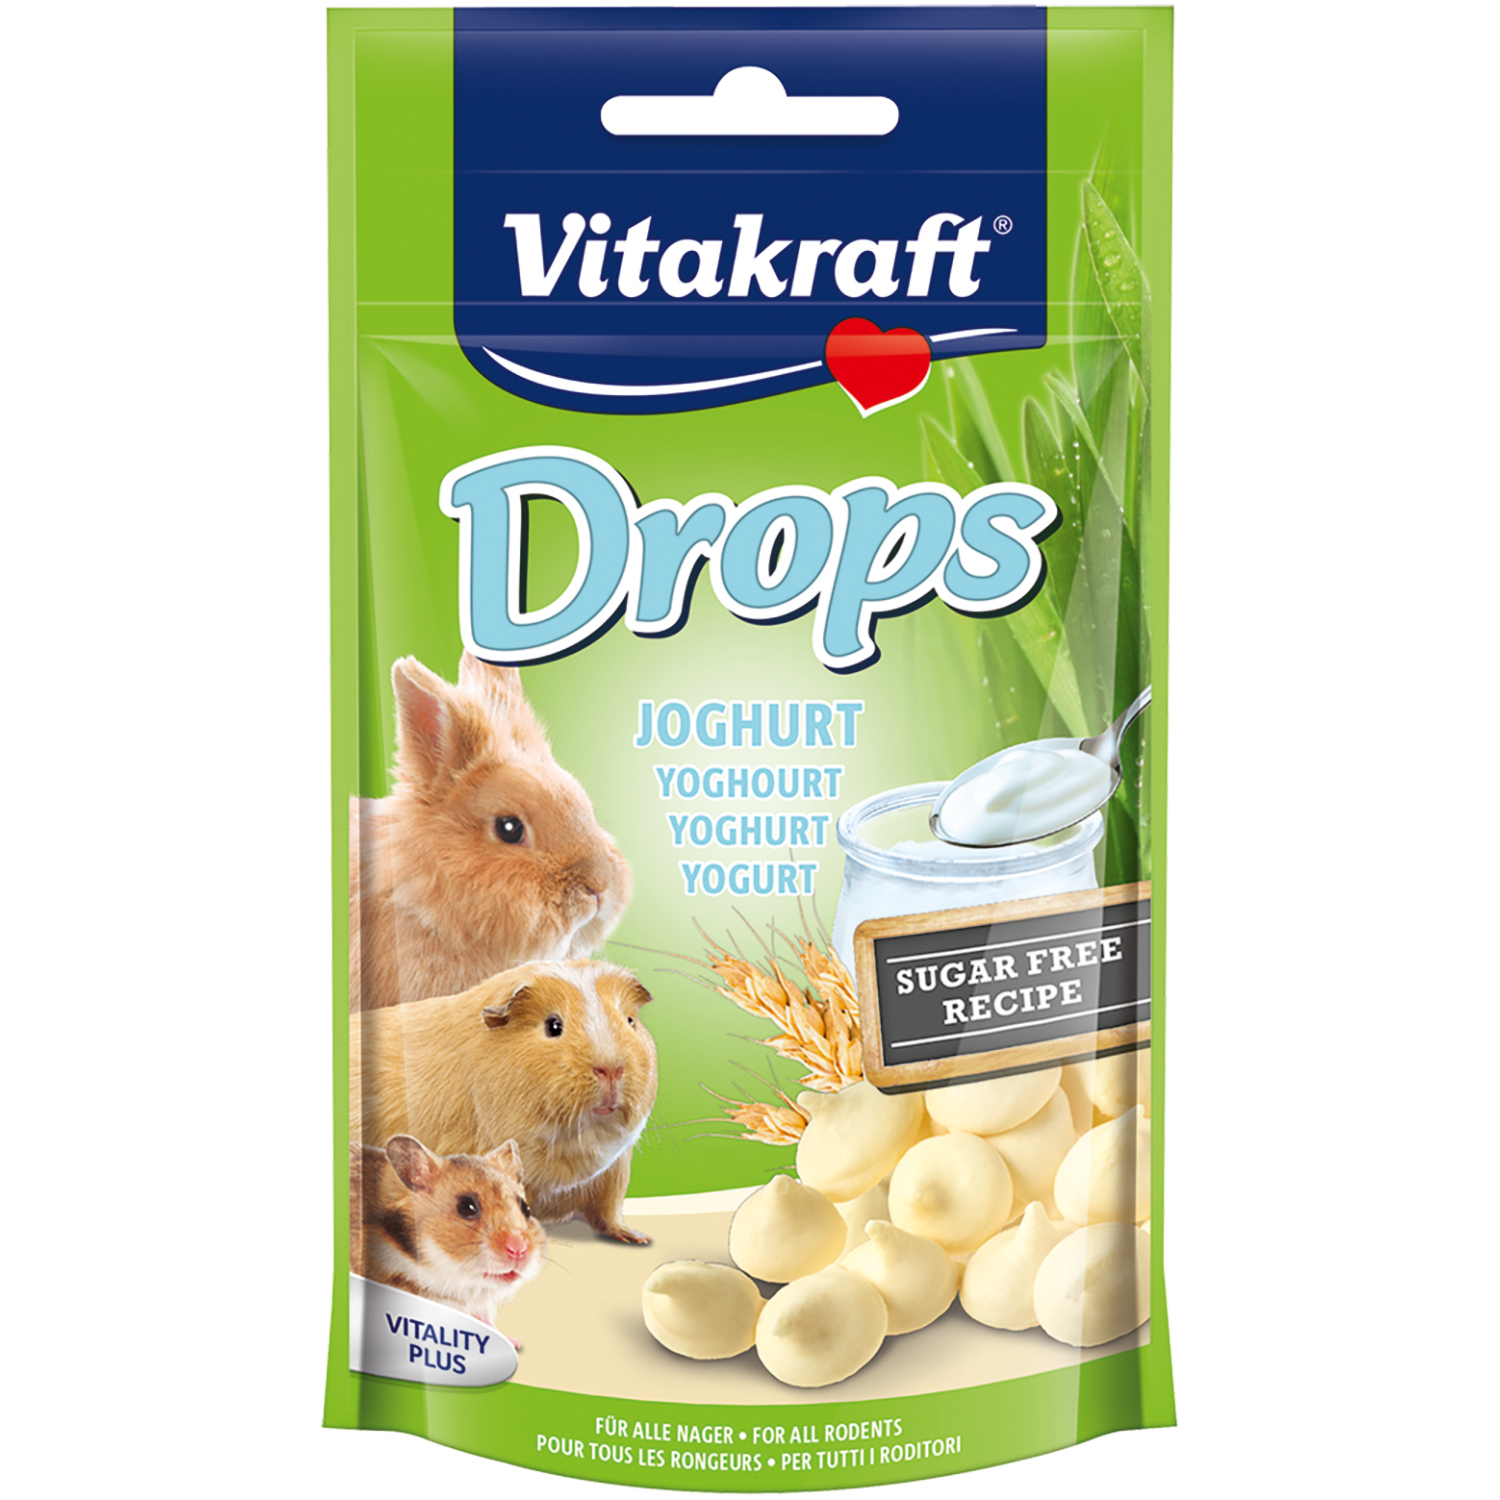 Vitakraft Small Animal Yoghurt Drops Treat 75g Image